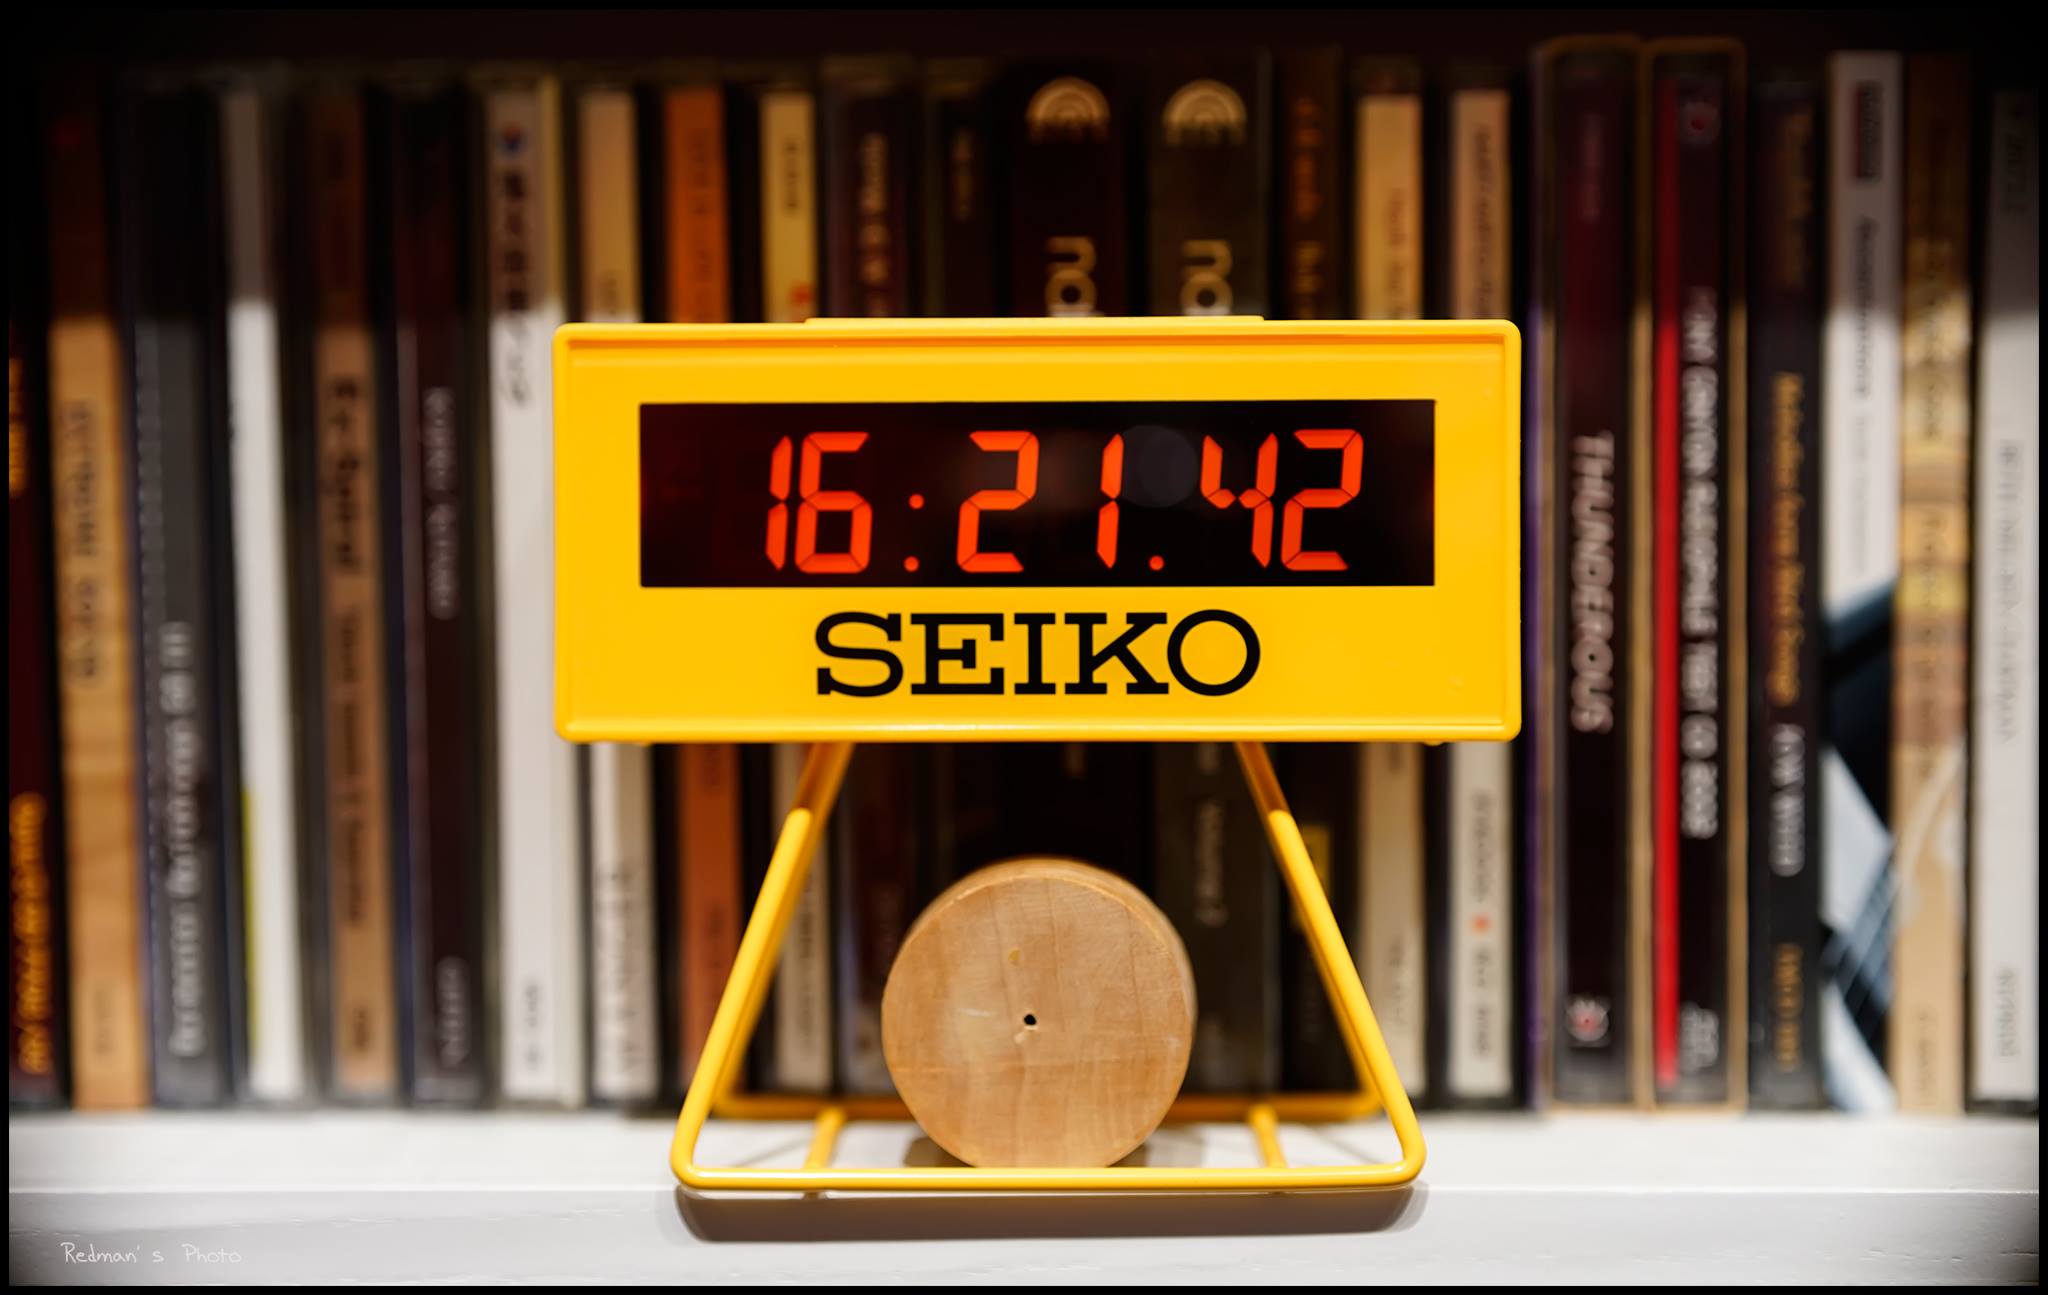 Seiko QHL062Y LCD Alarm Clock with countdown timer | Lazada Singapore